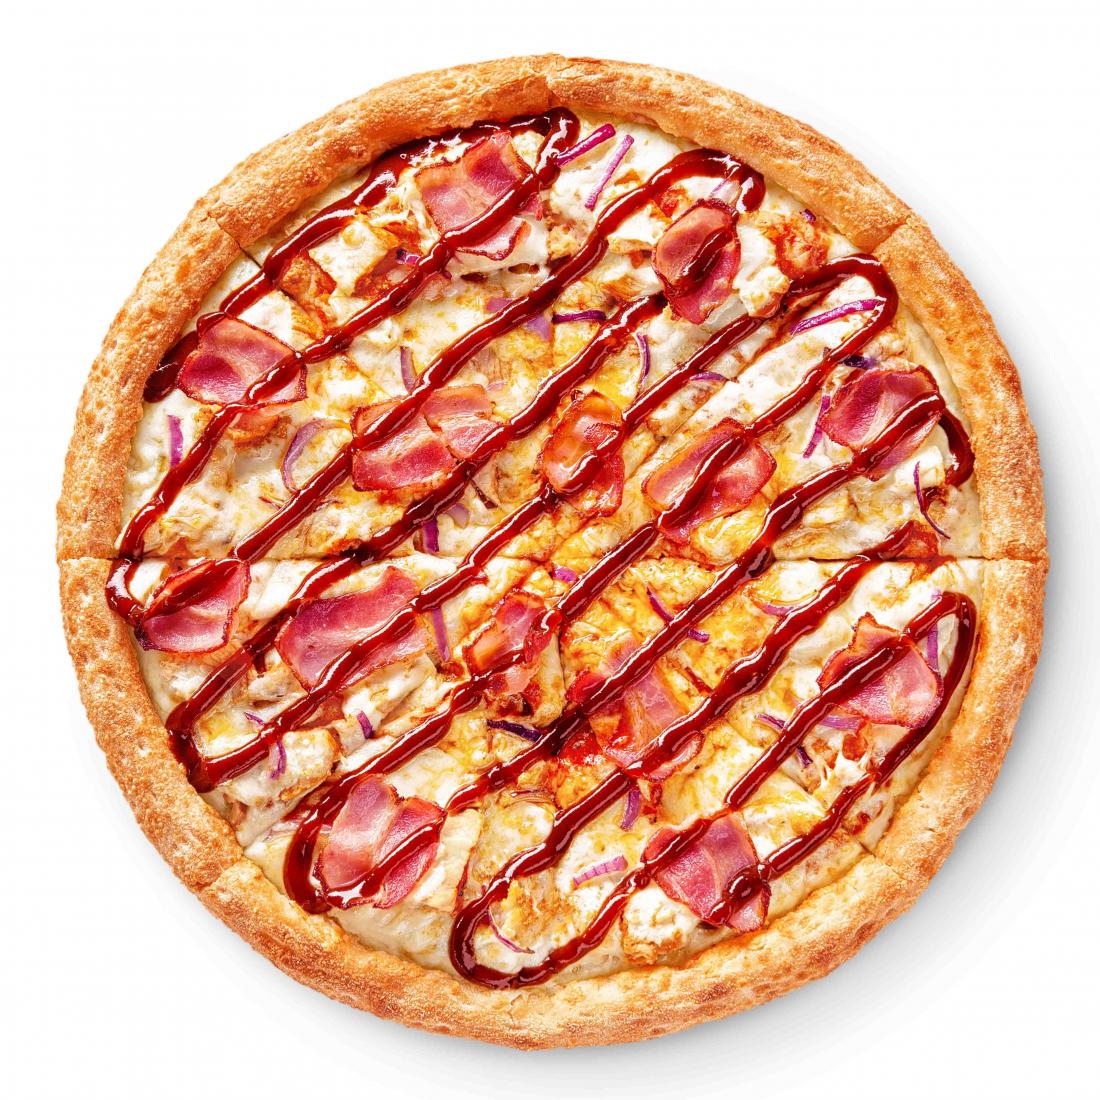 состав пиццы пепперони в додо пицца фото 86